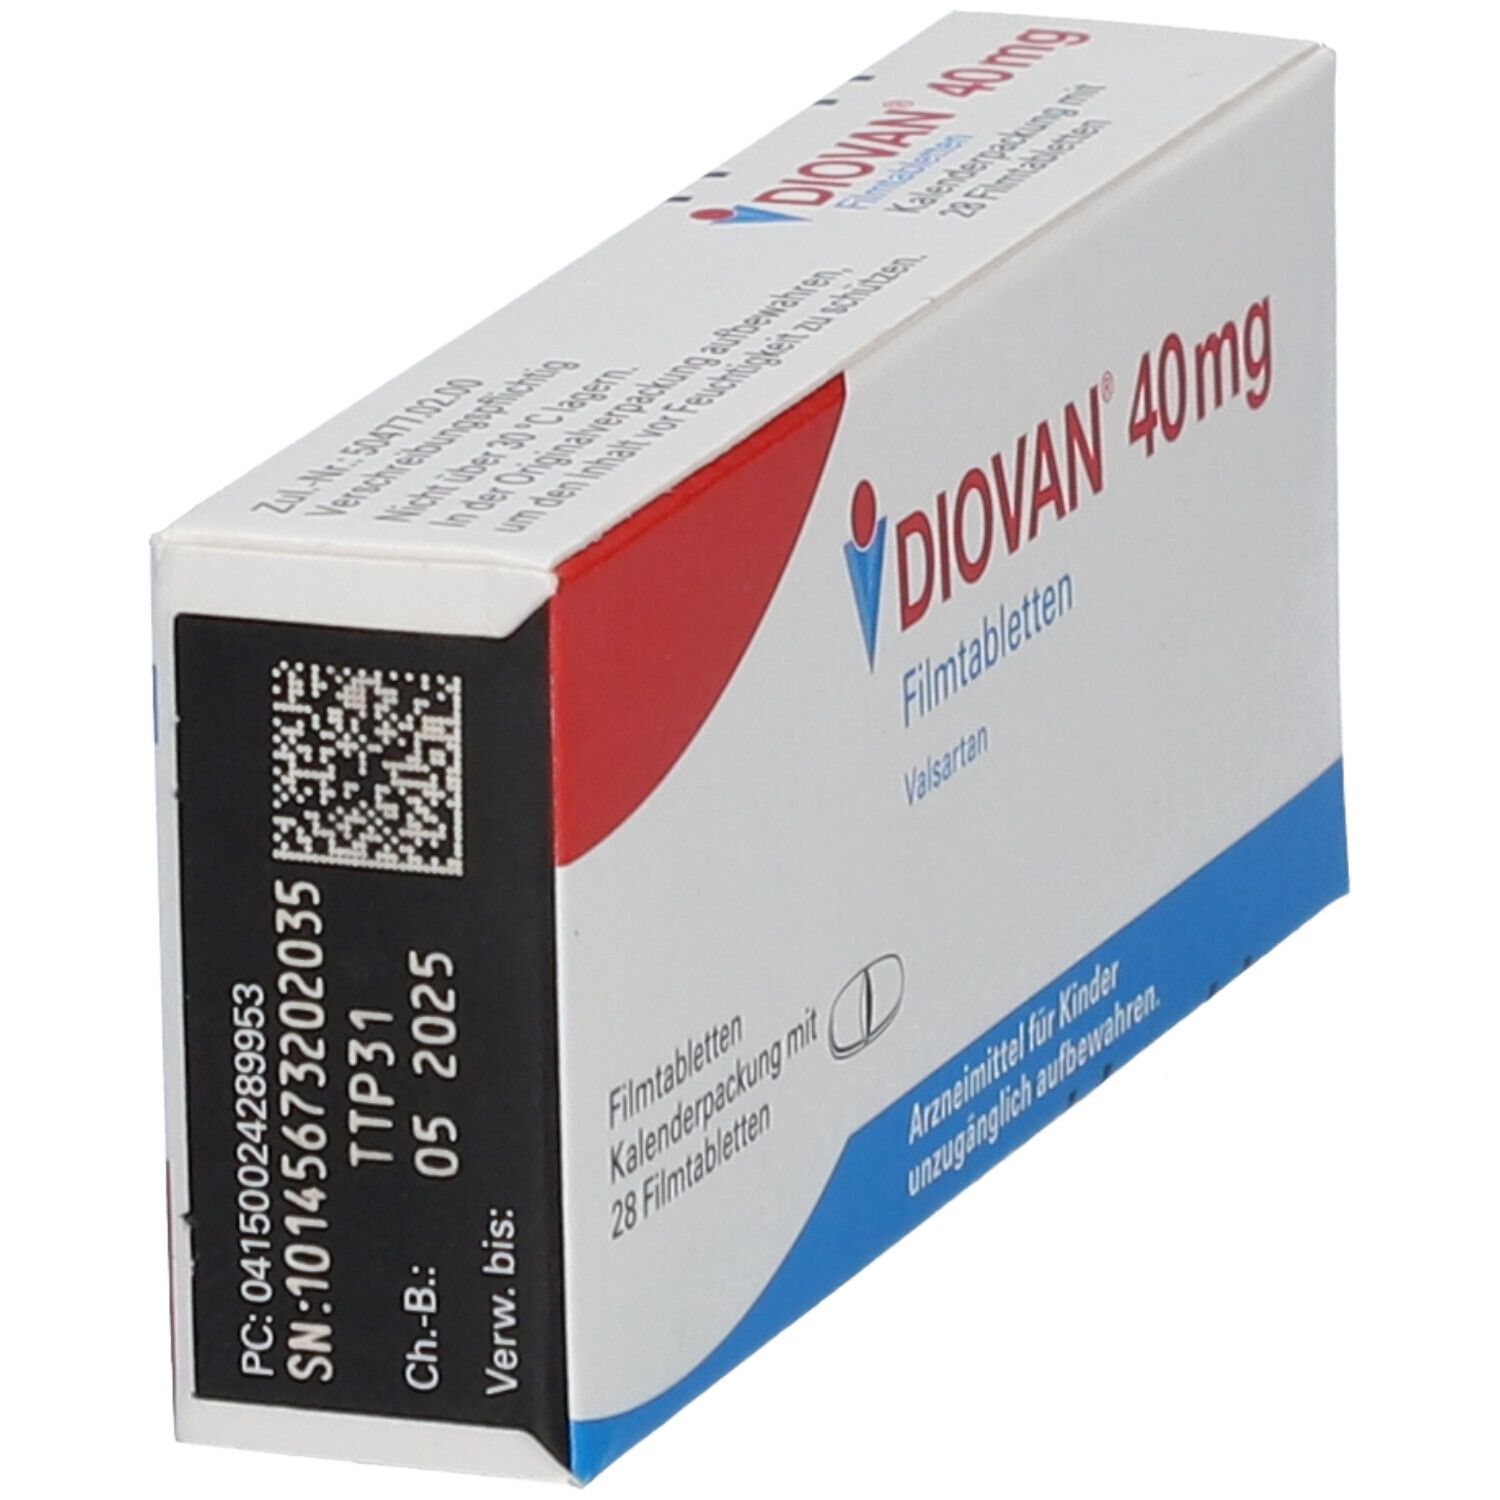 Diovan® 40 mg